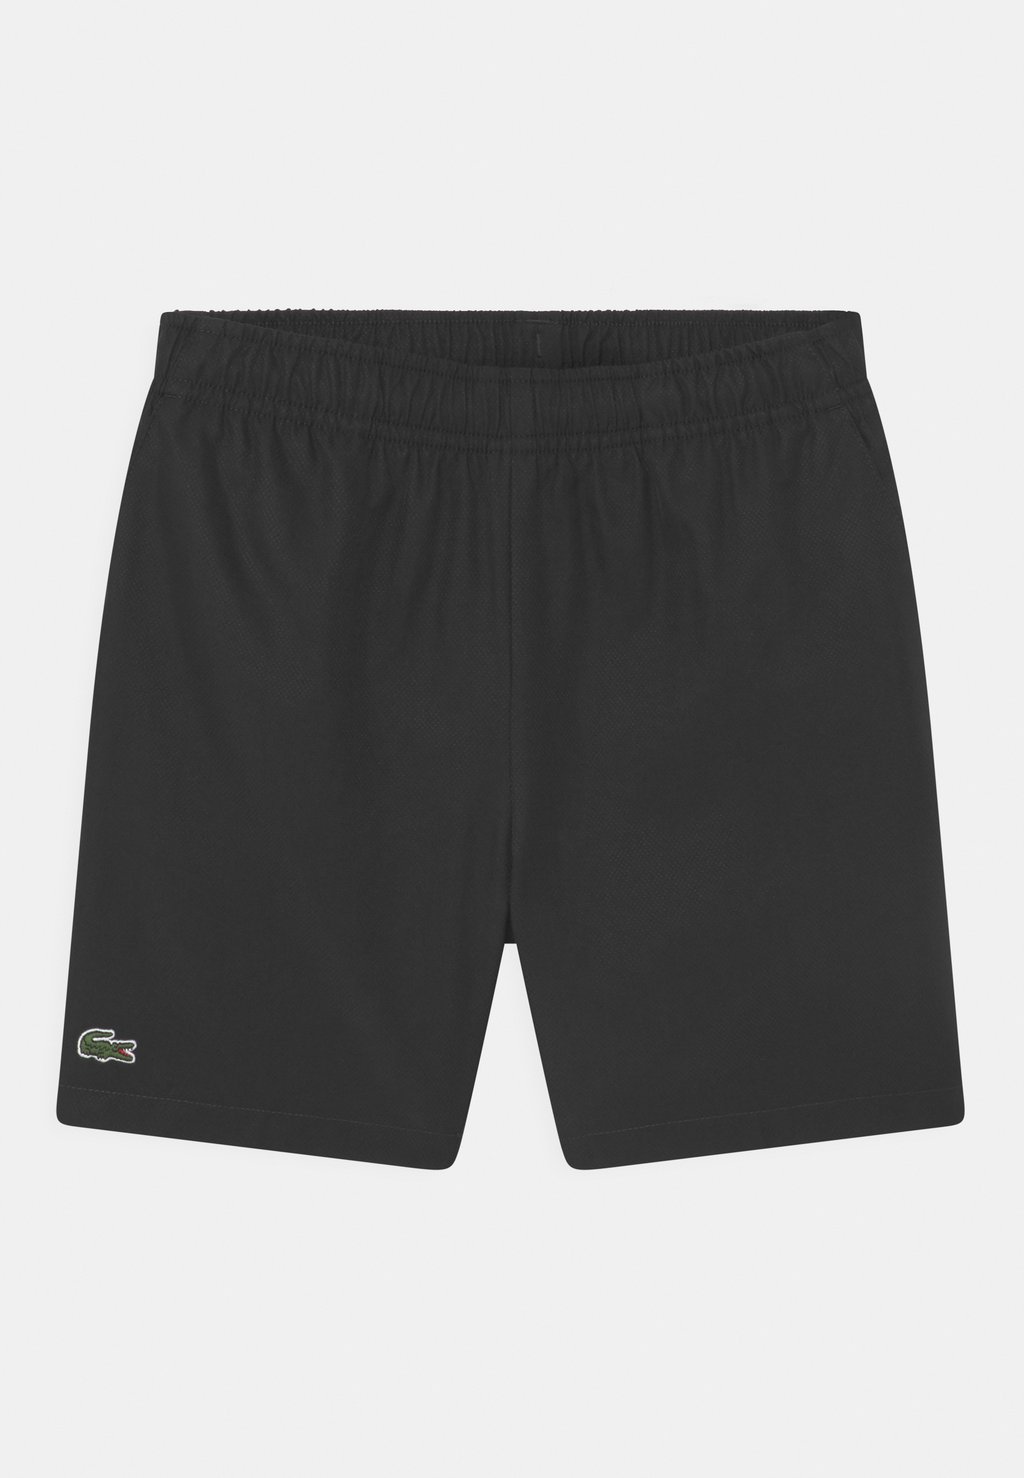 Спортивные шорты Sports Shorts Lacoste, черный спортивные шорты tennis shorts heritage lacoste белый